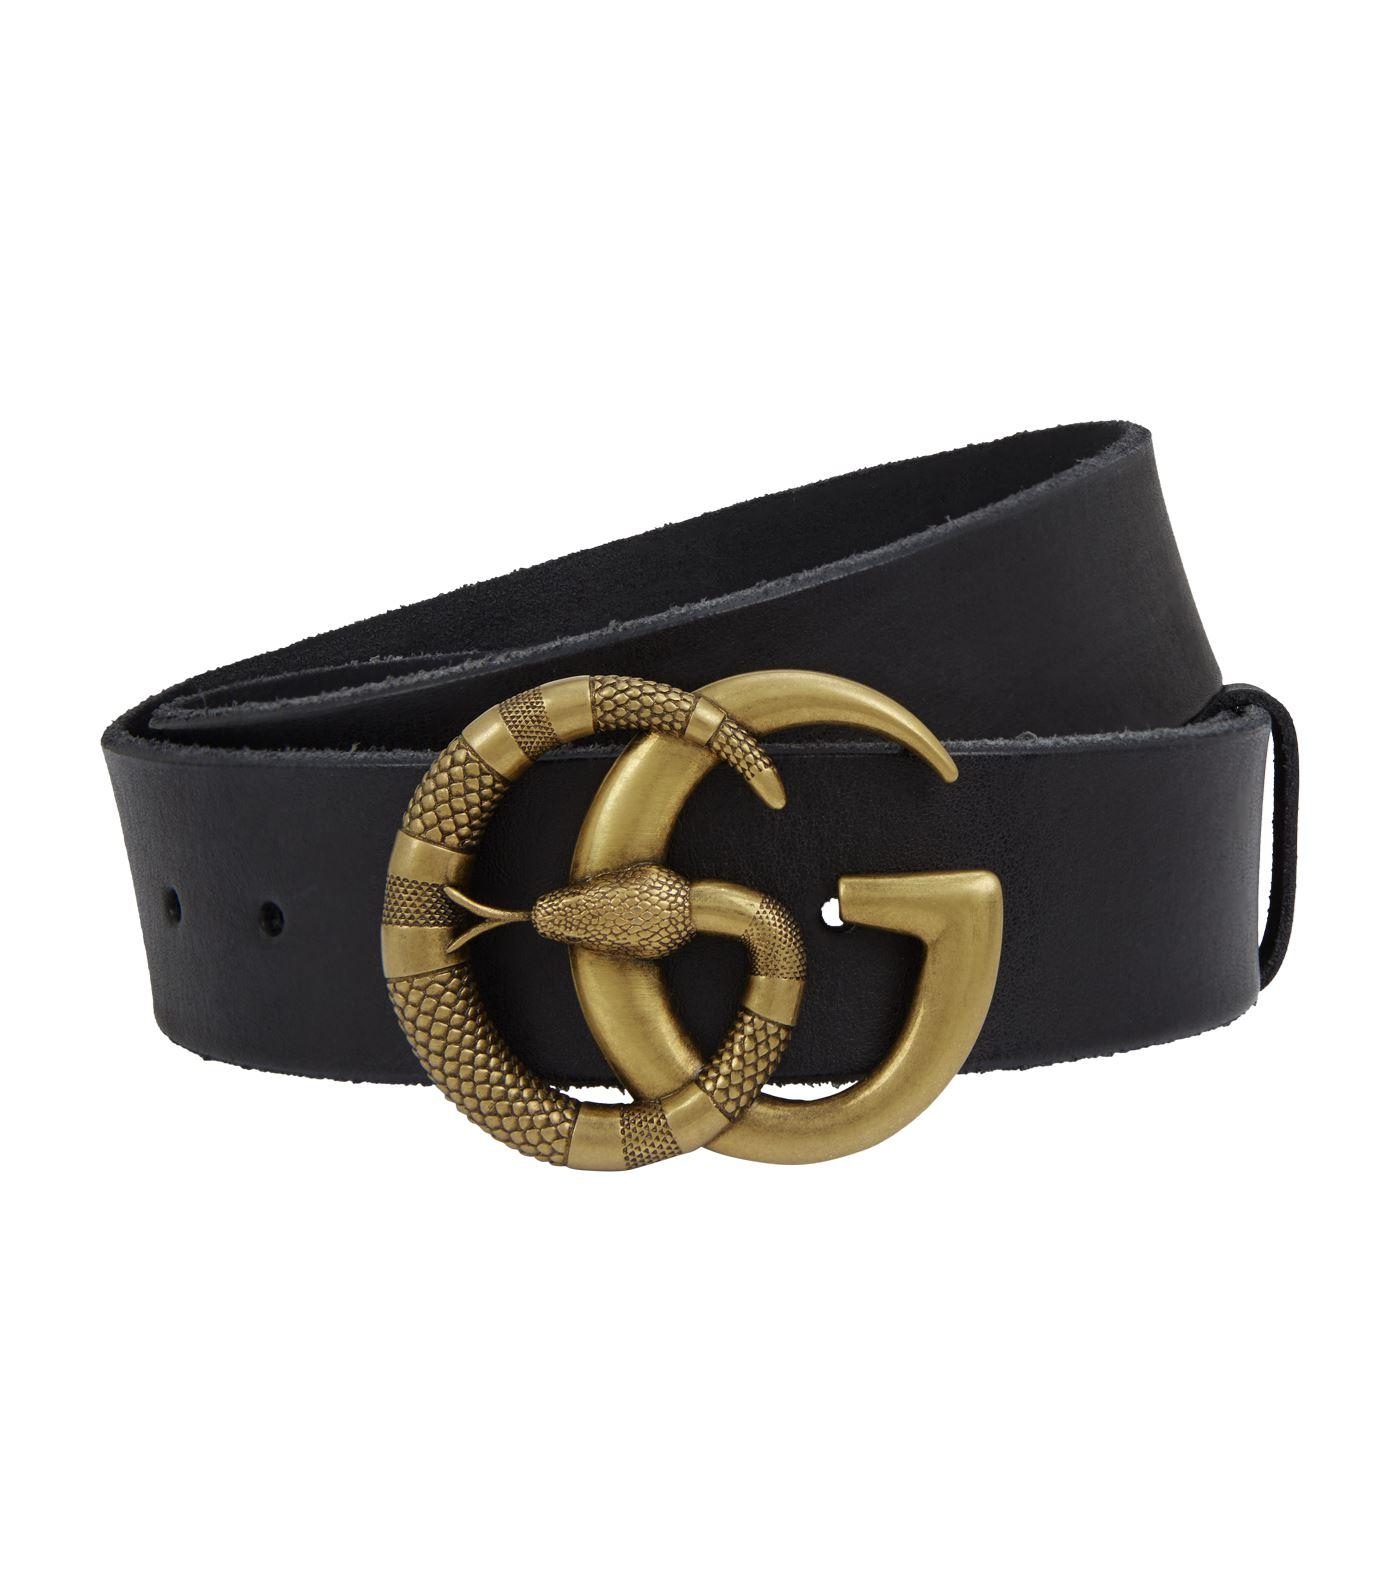 Gucci Double G Snake Belt in Black for Men - Lyst